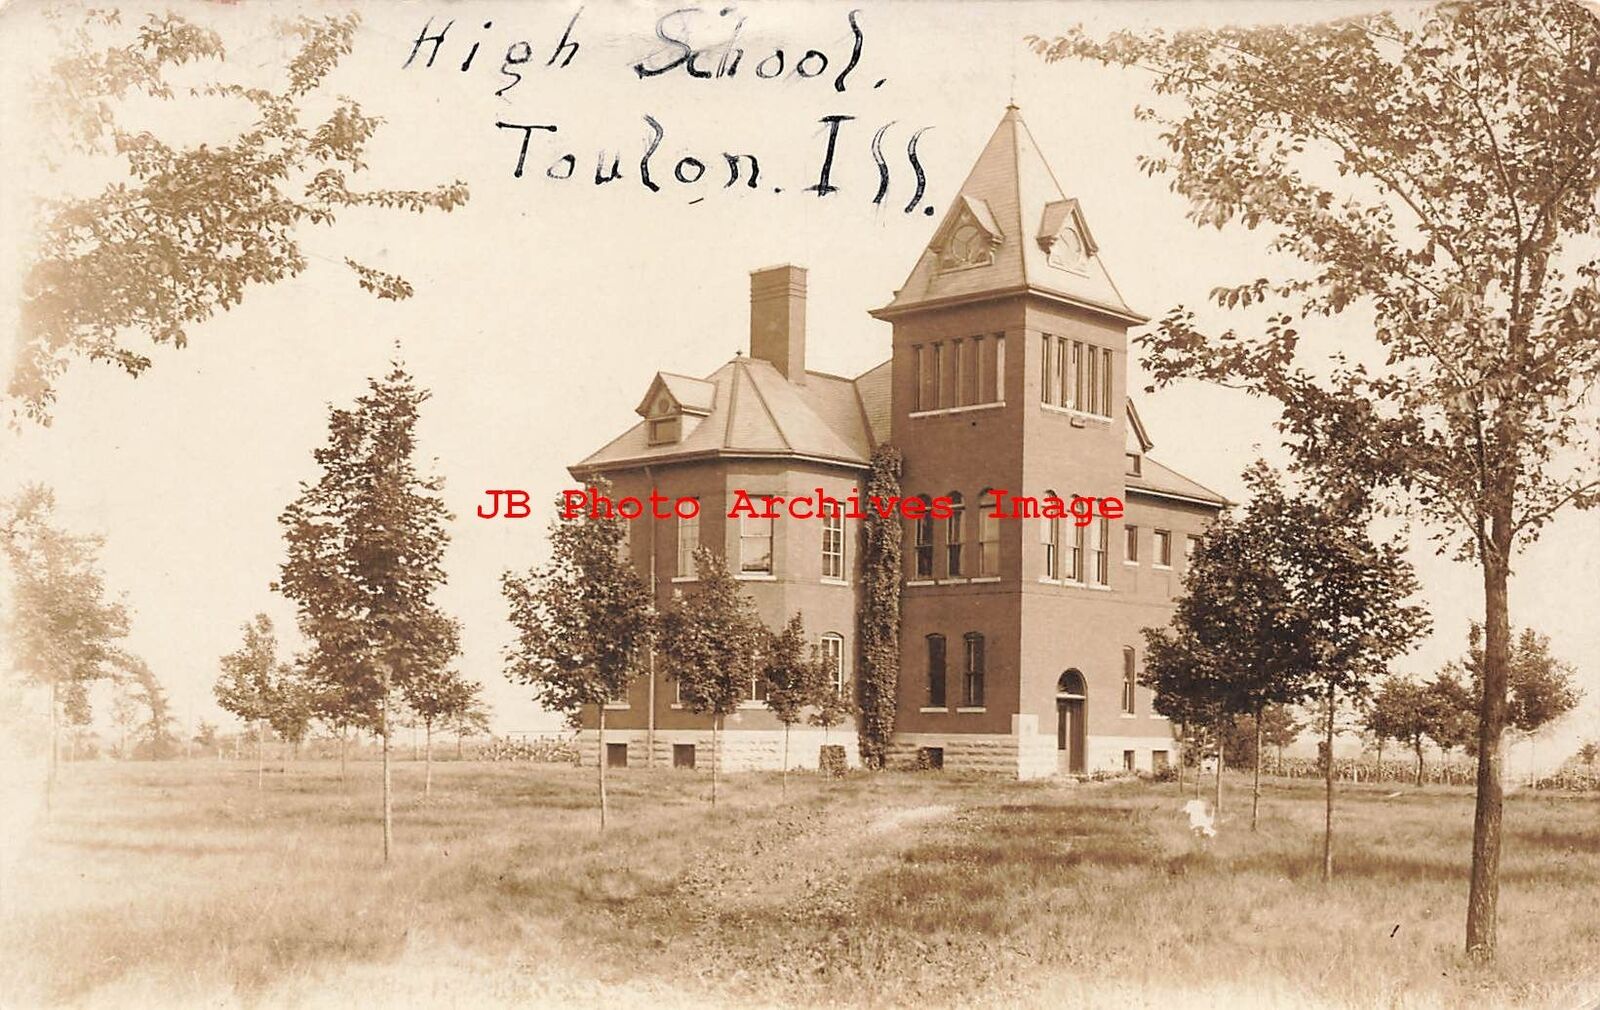 IL, Toulon, Illinois, RPPC, High School Building, Exterior View, Photo